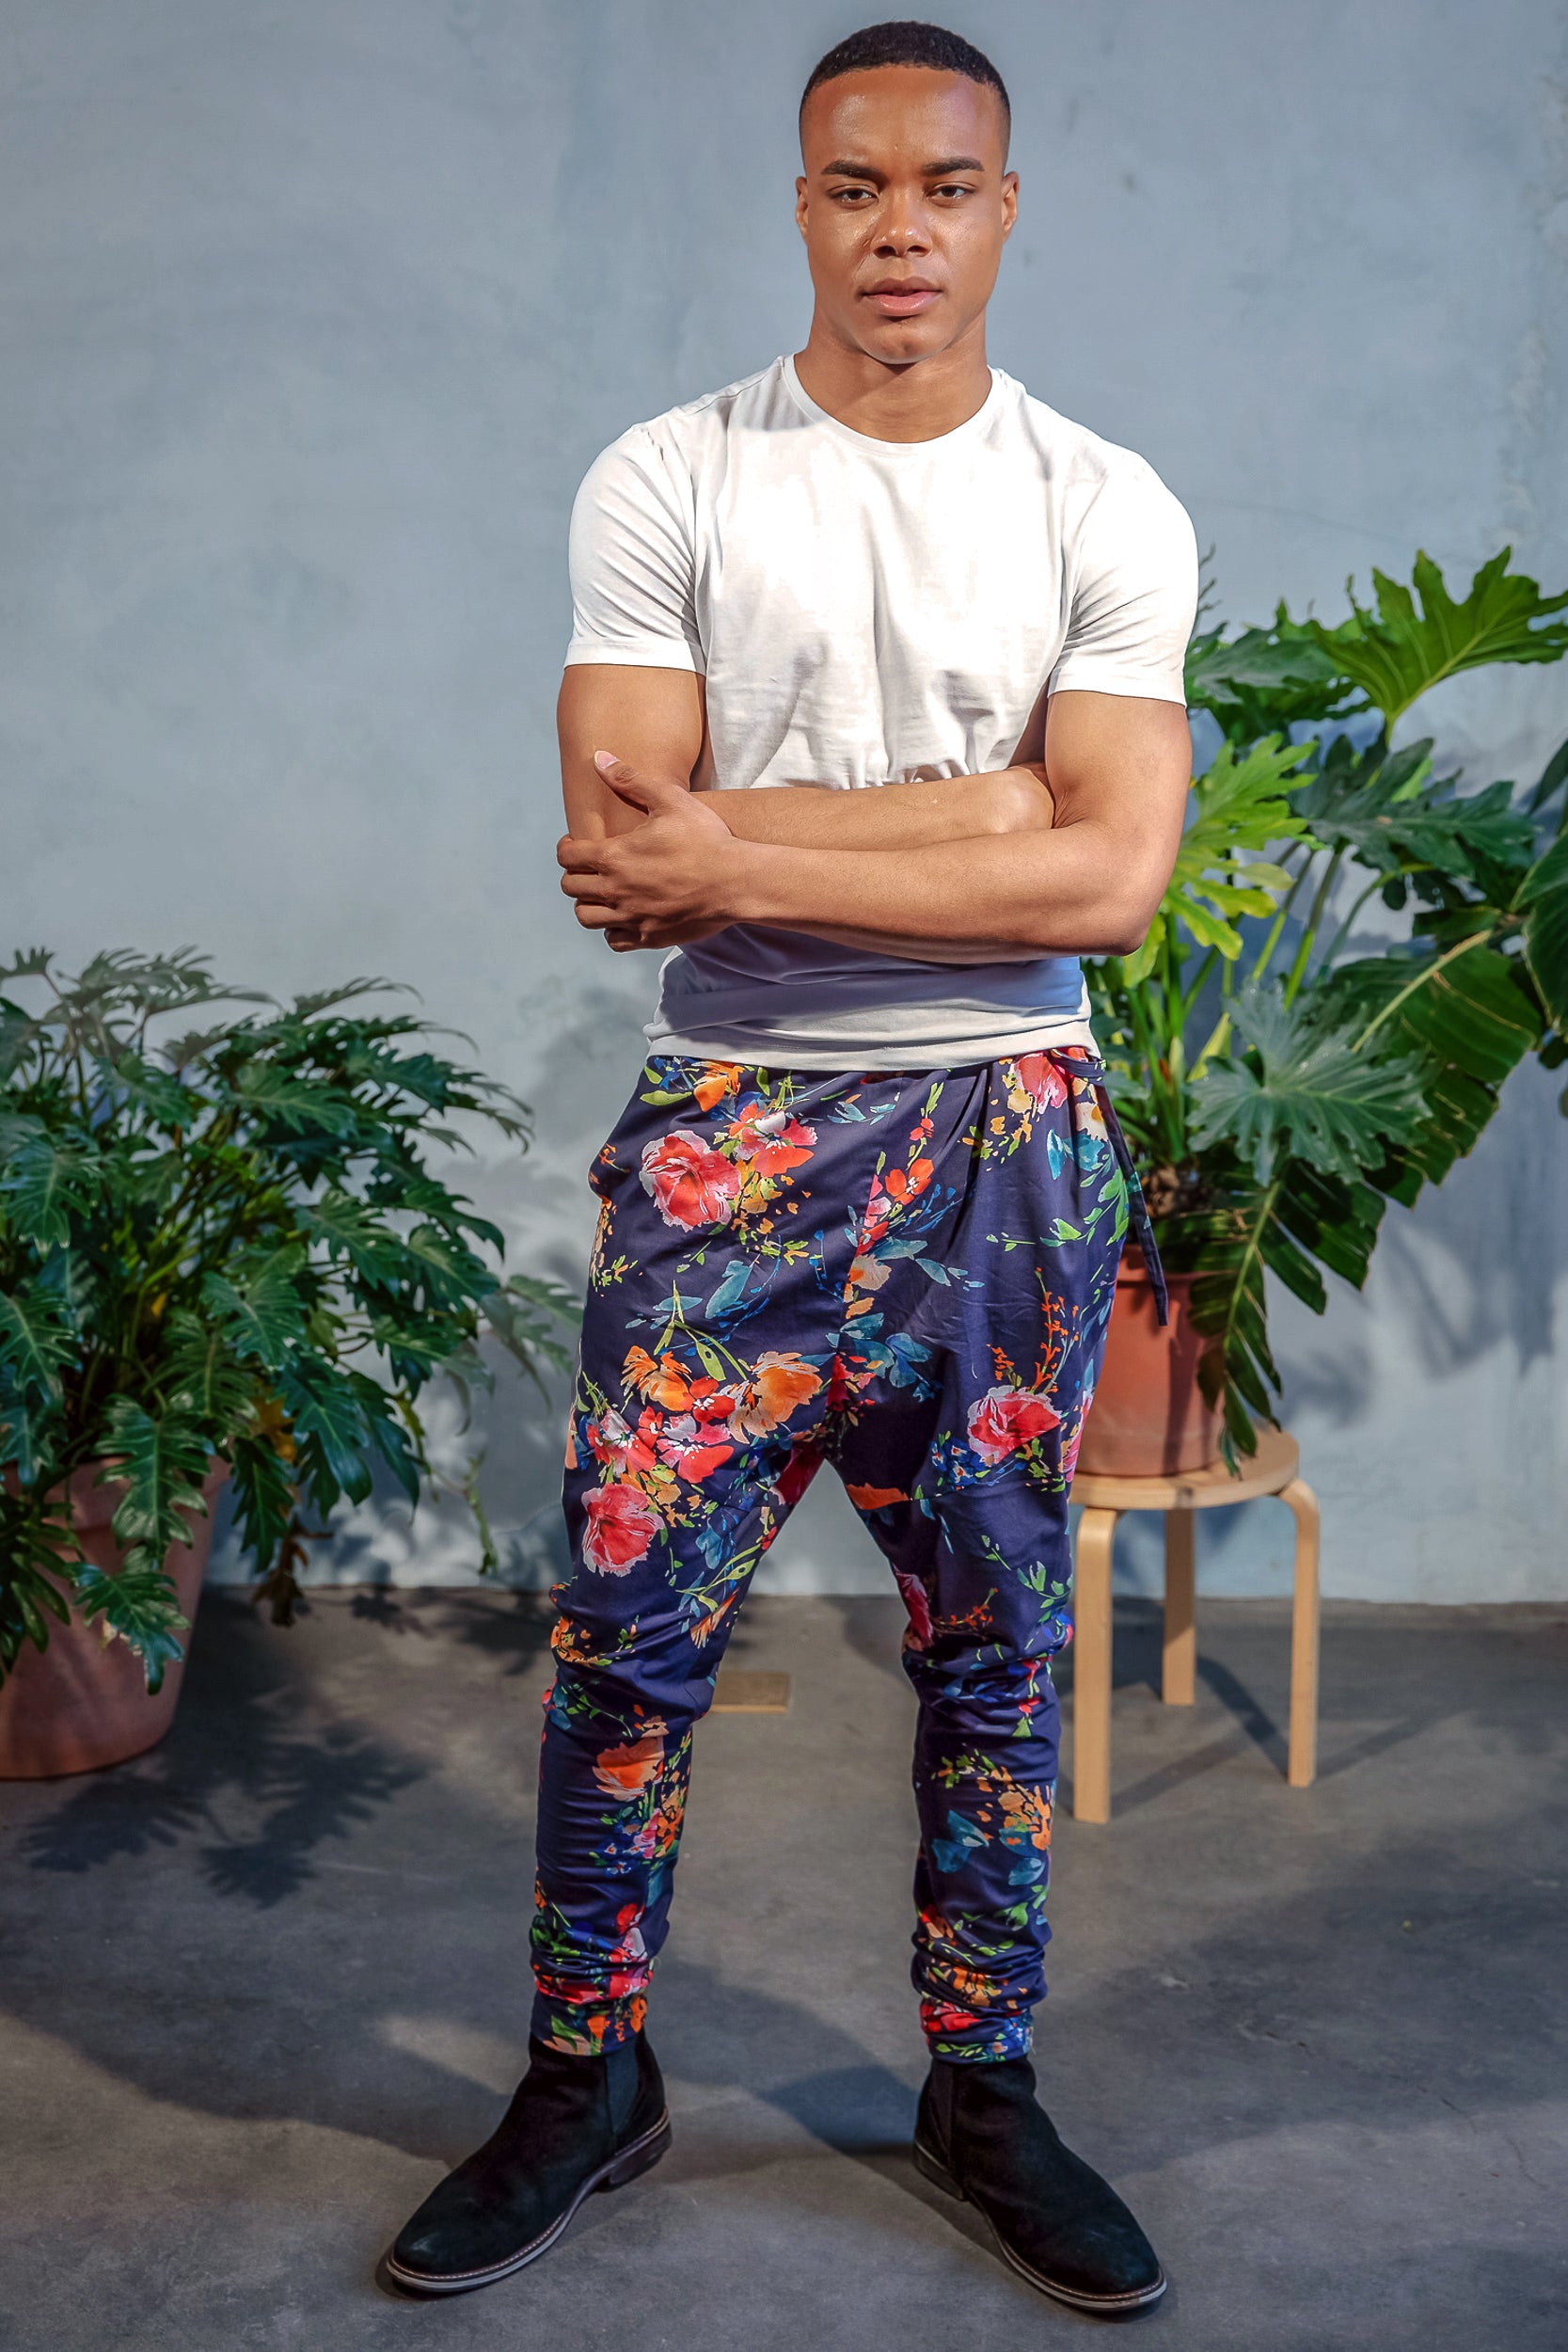 Buy khaki Trousers & Pants for Men by GAP Online | Ajio.com